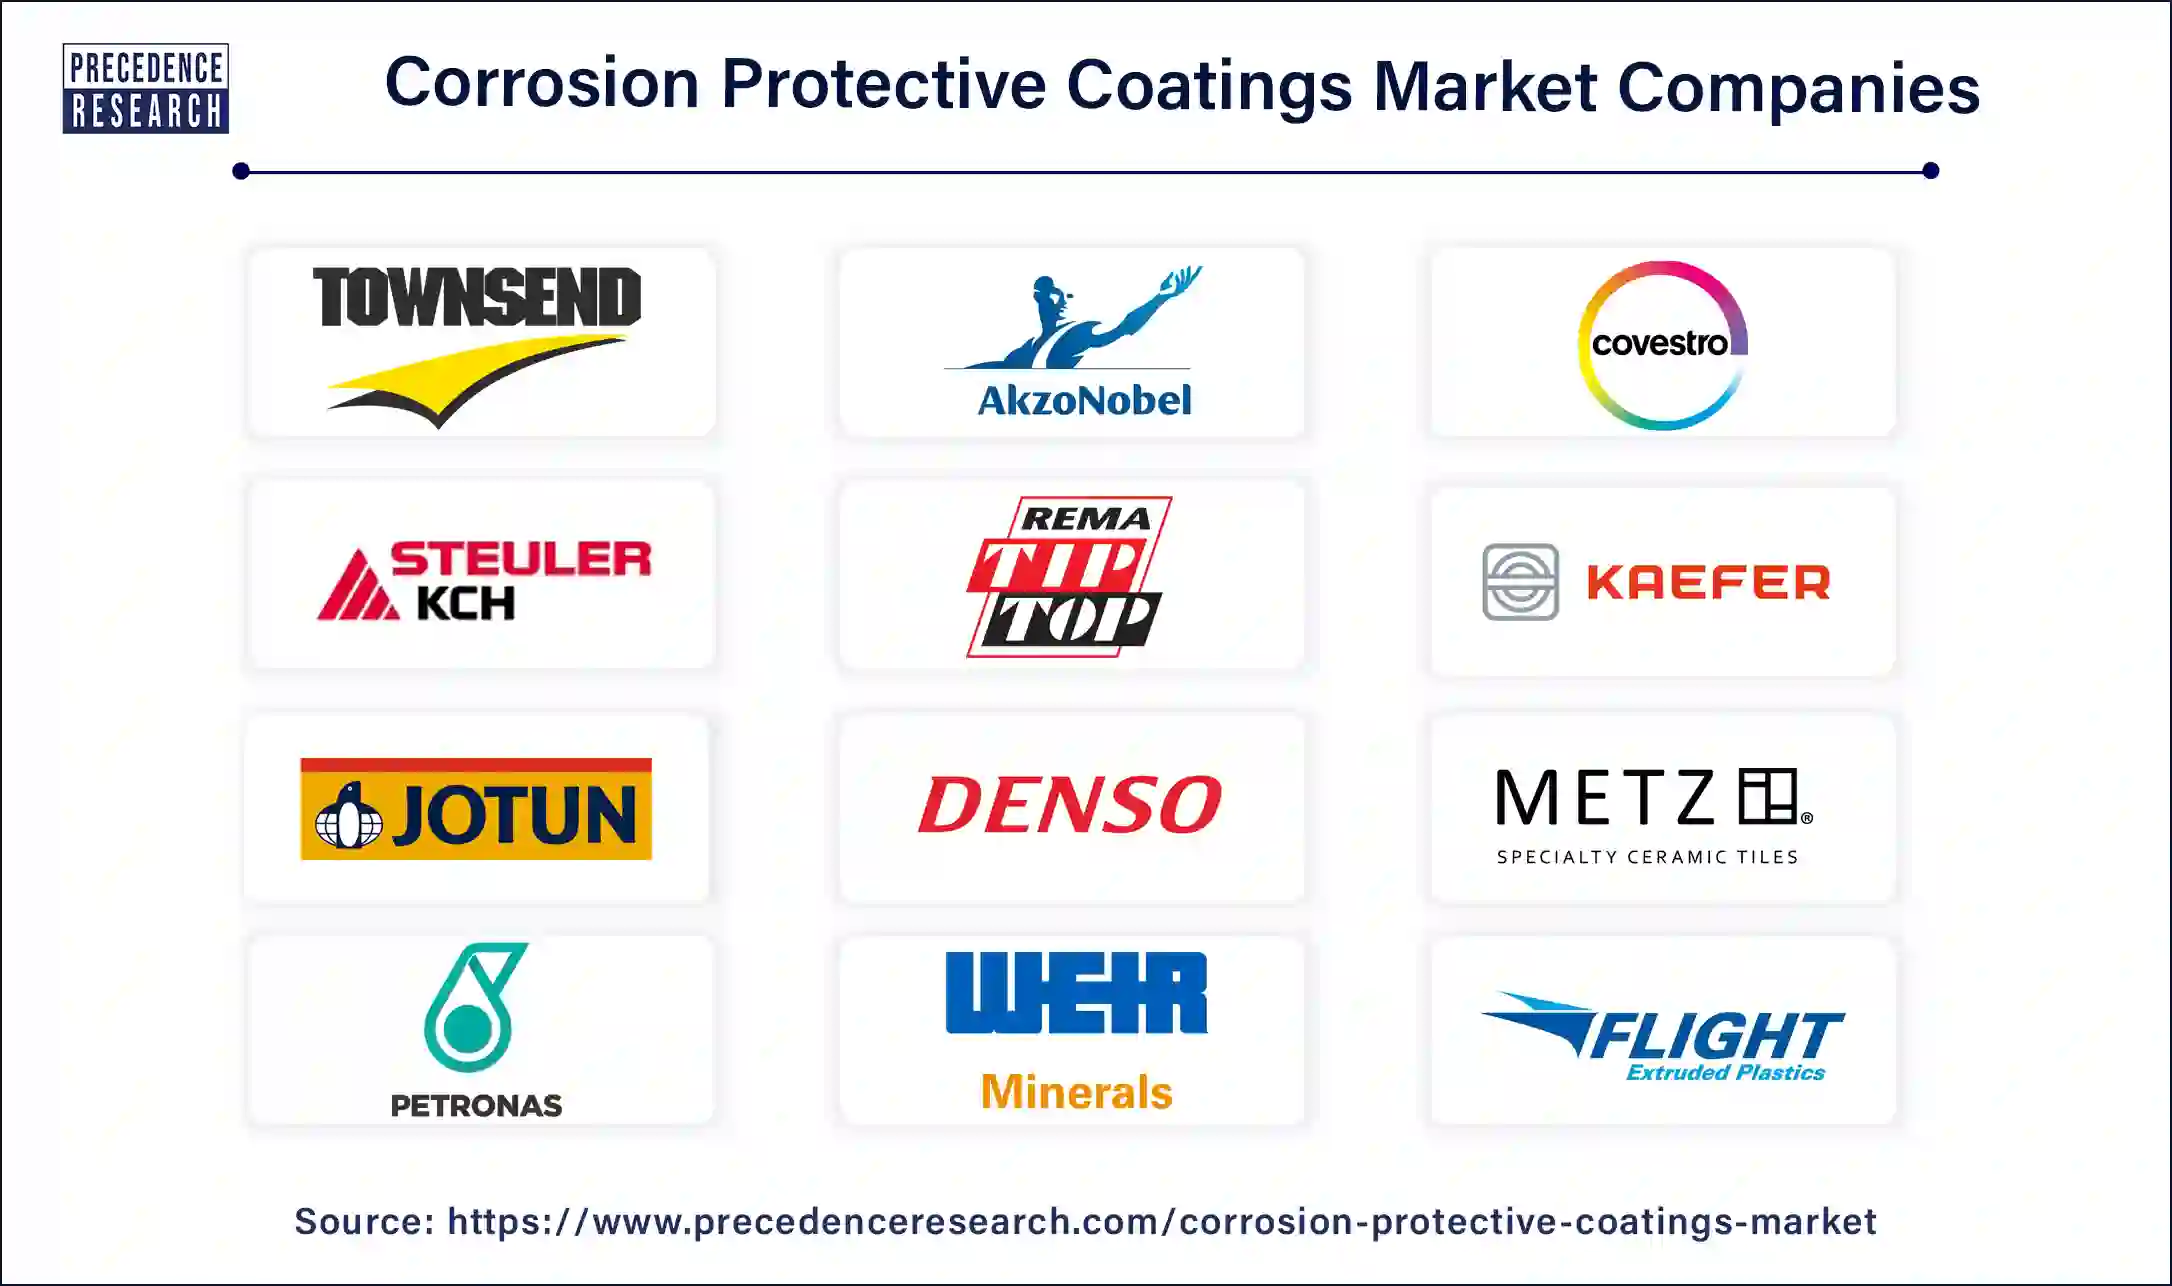 Corrosion Protective Coatings Companies